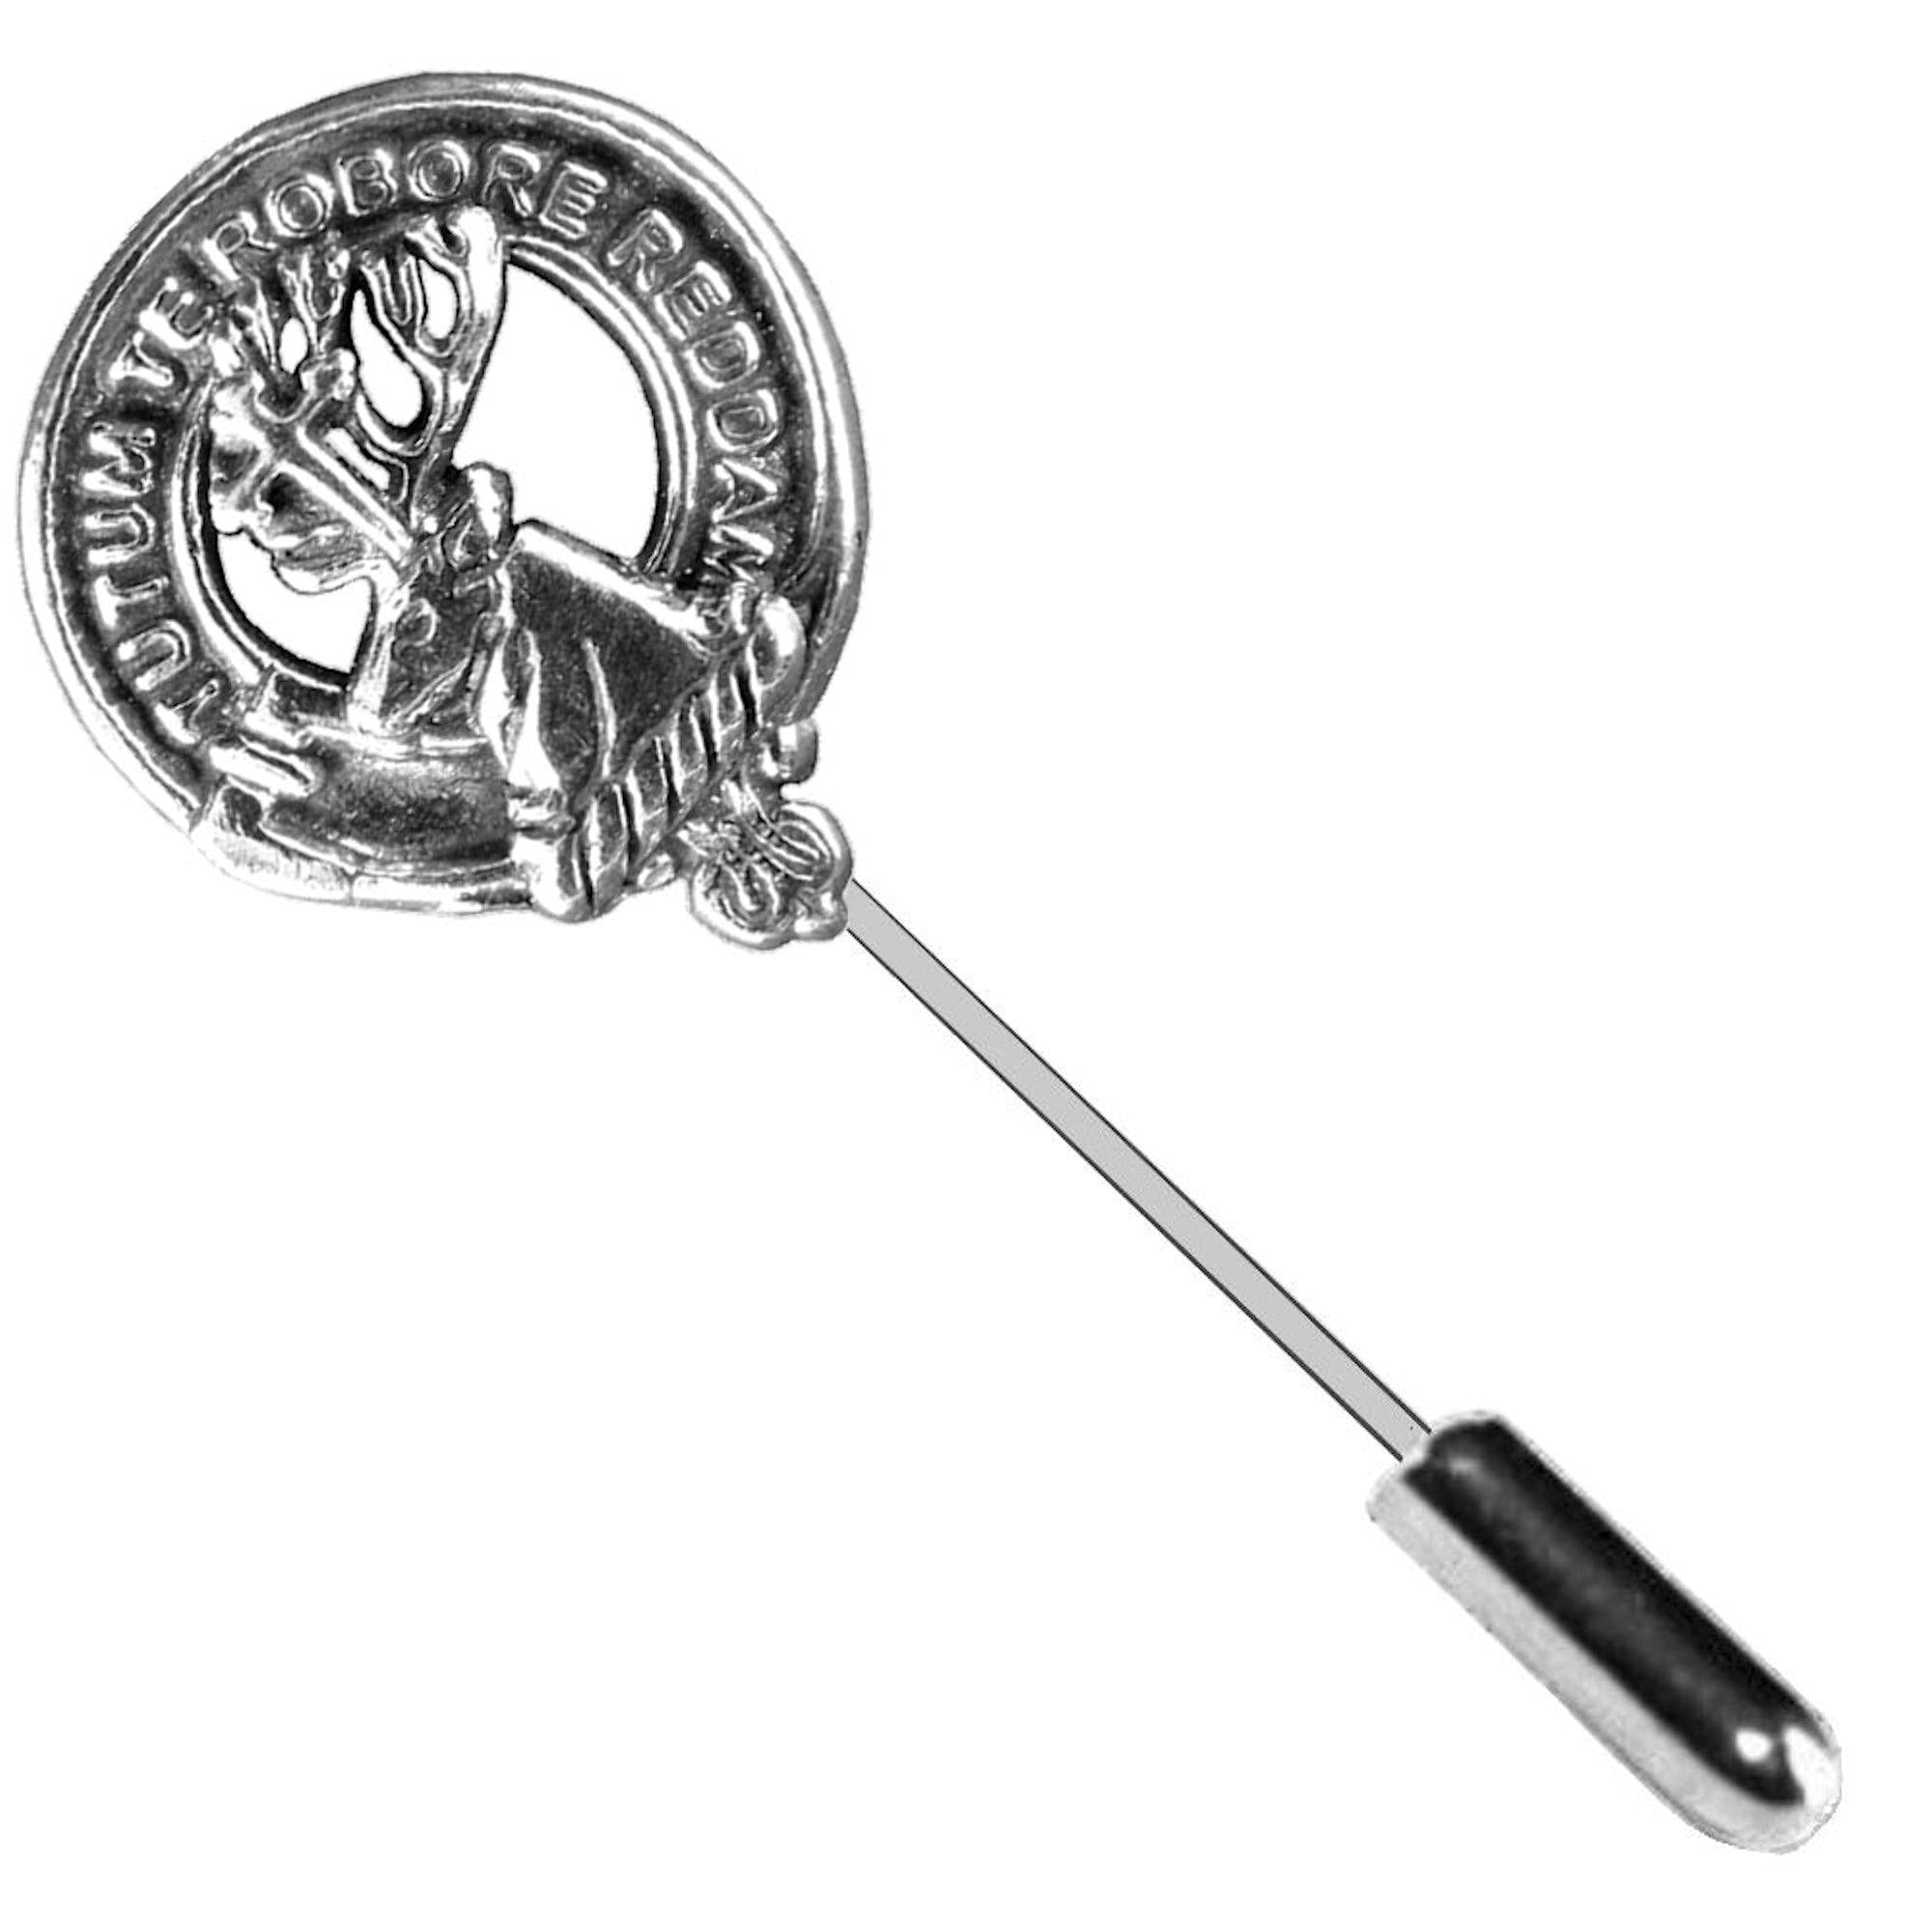 Crawford Clan Crest Stick or Cravat pin, Sterling Silver